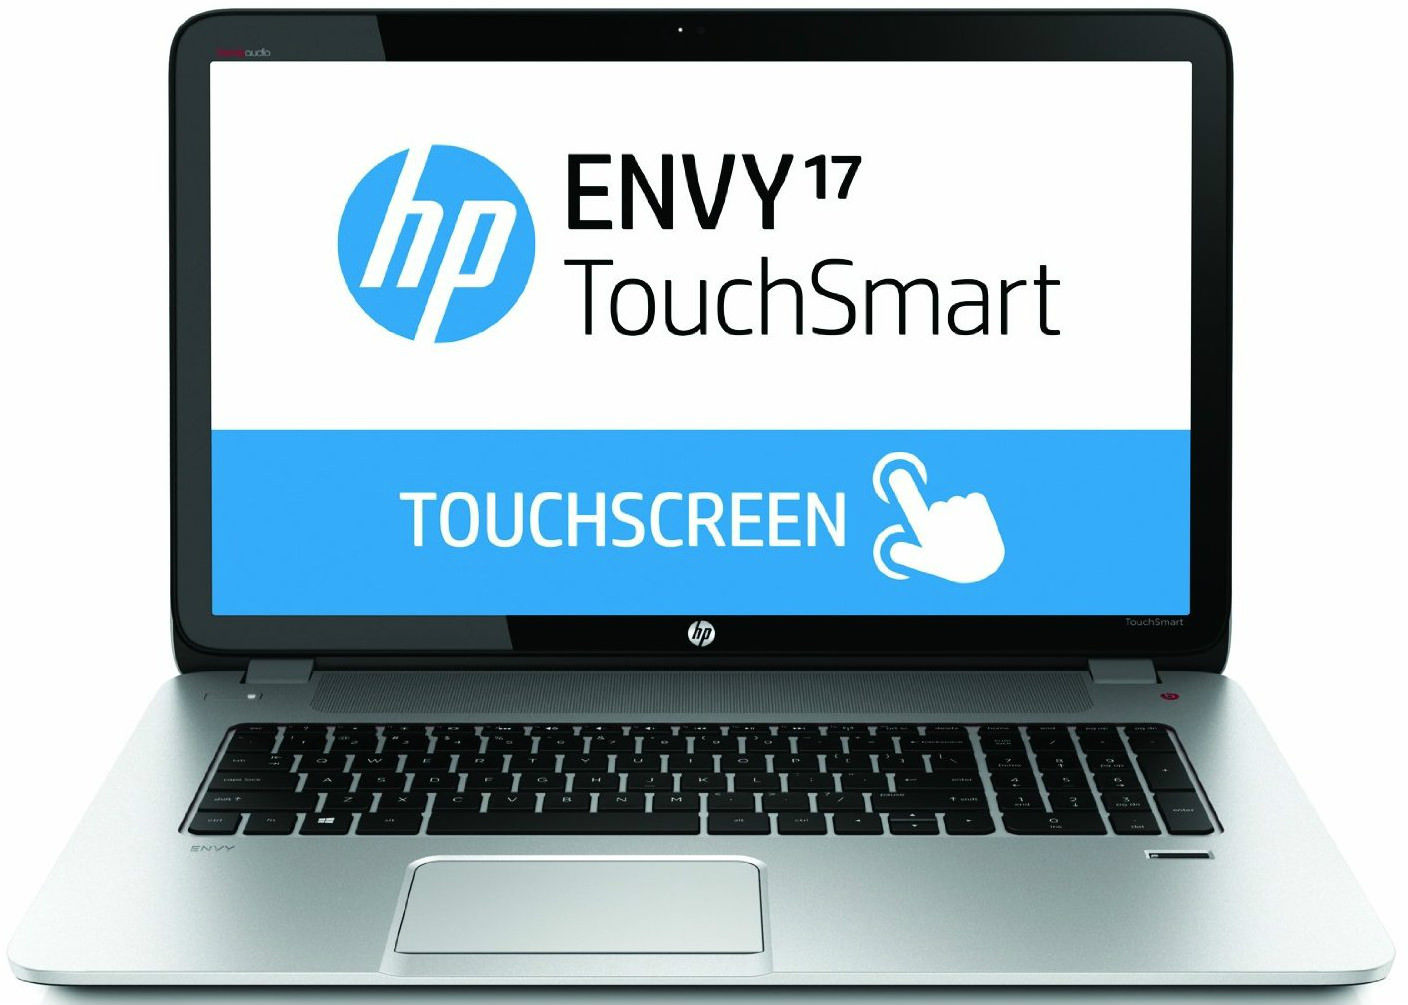 HP ENVY TouchSmart 17-j130us (E8A04UA) Laptop (Core i7 4th Gen/12 GB/1 TB/Windows 8 1/1 GB) Price